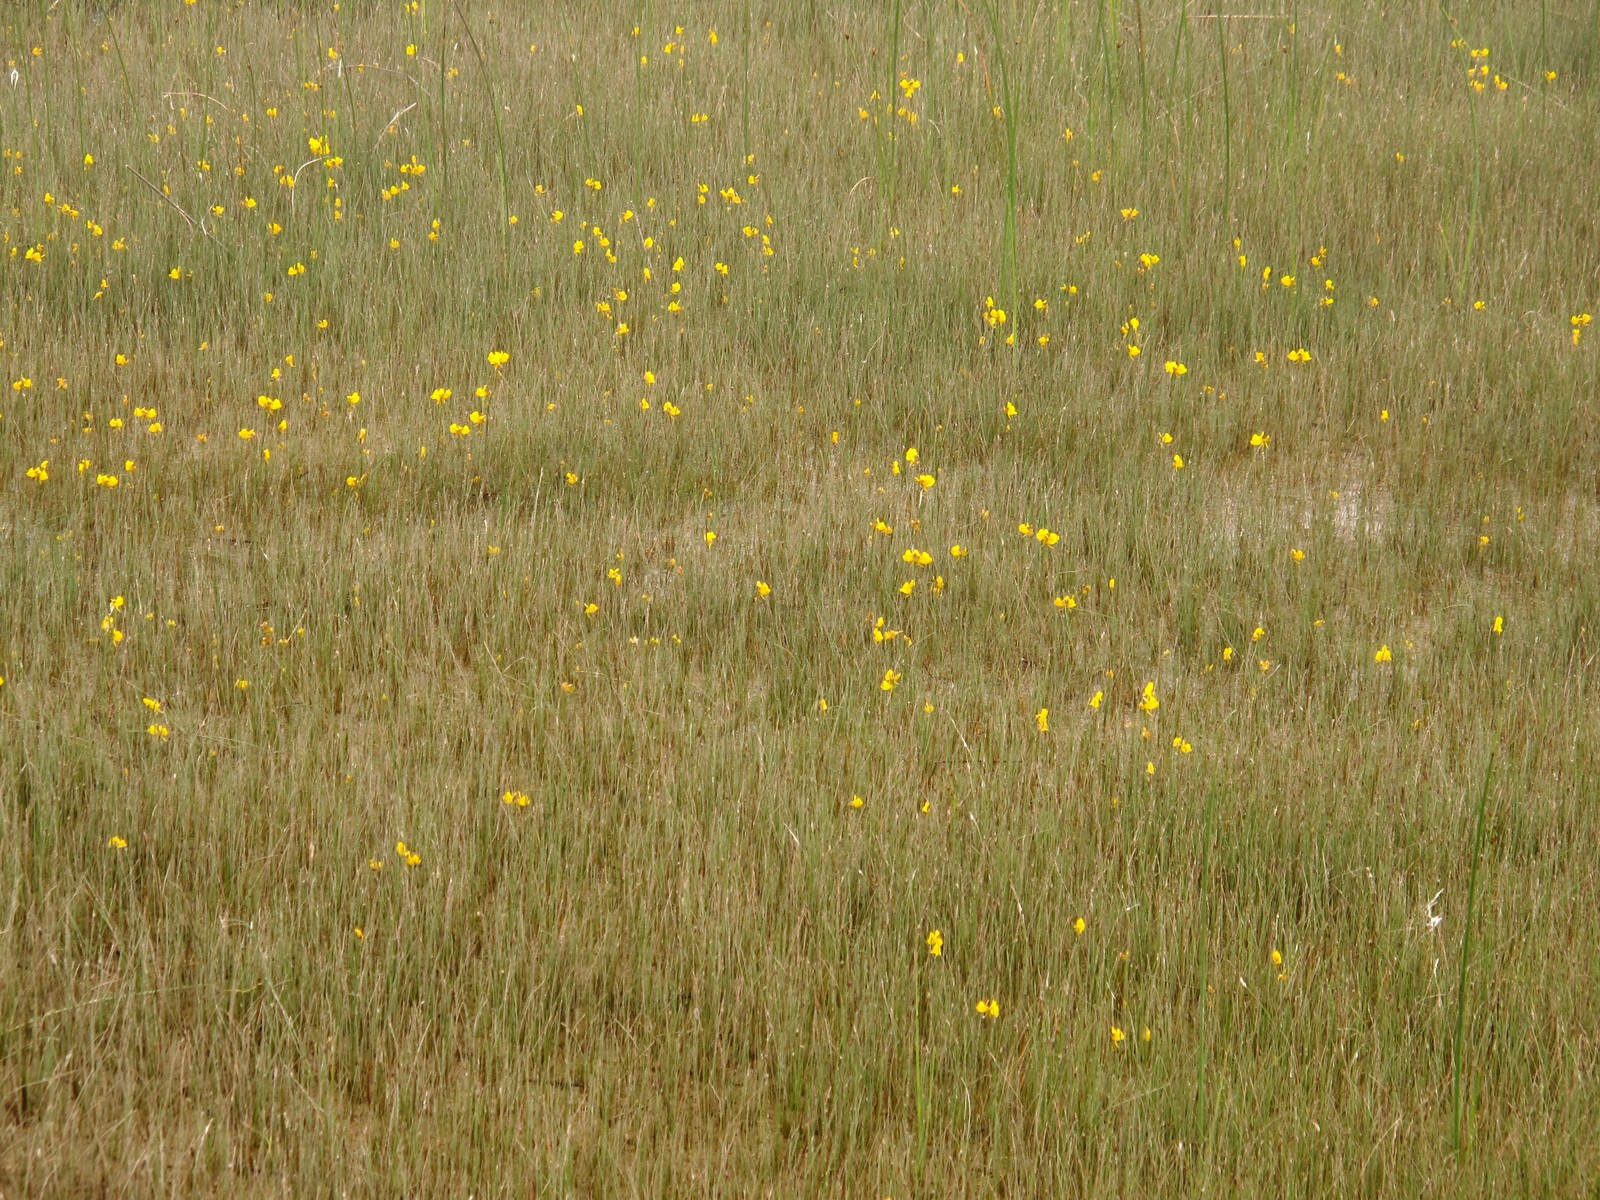 201107281324244 Common Bladderwort (Utricularia vulgaris) - Misery Bay NP, Manitoulin Island, ON.JPG